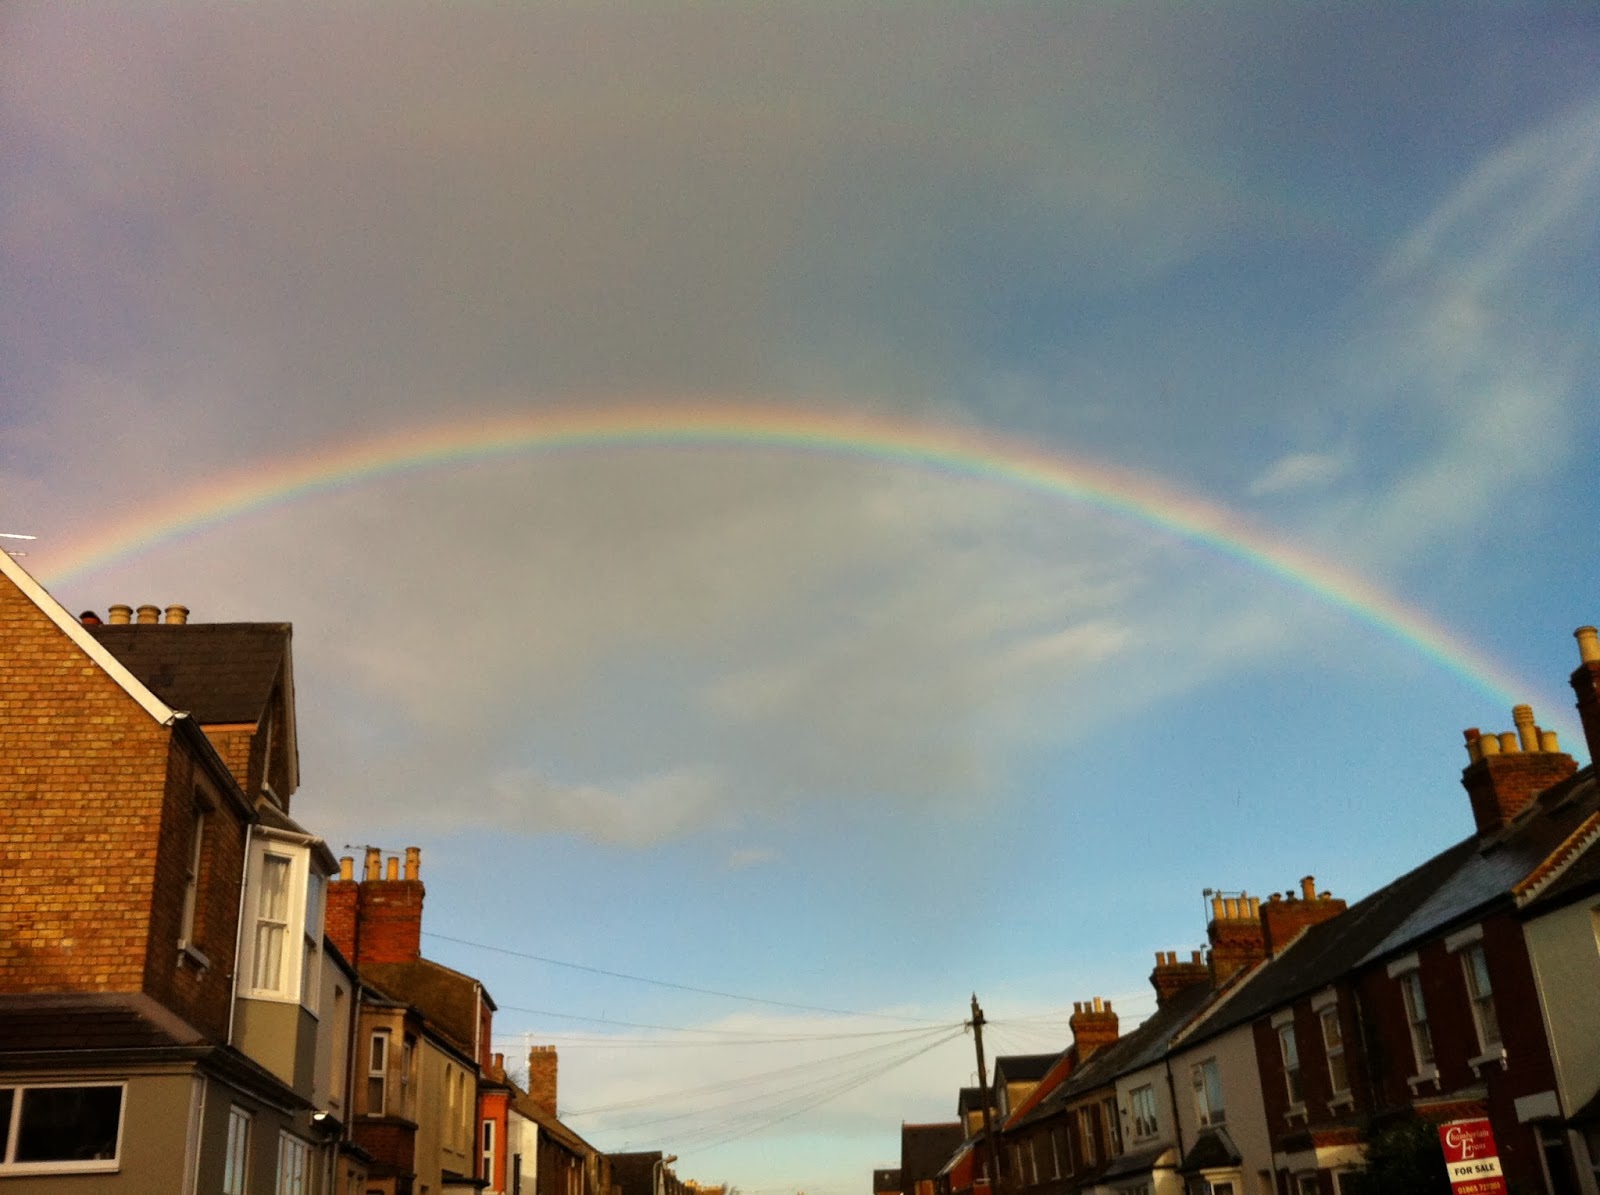 Rainbow over street of houses